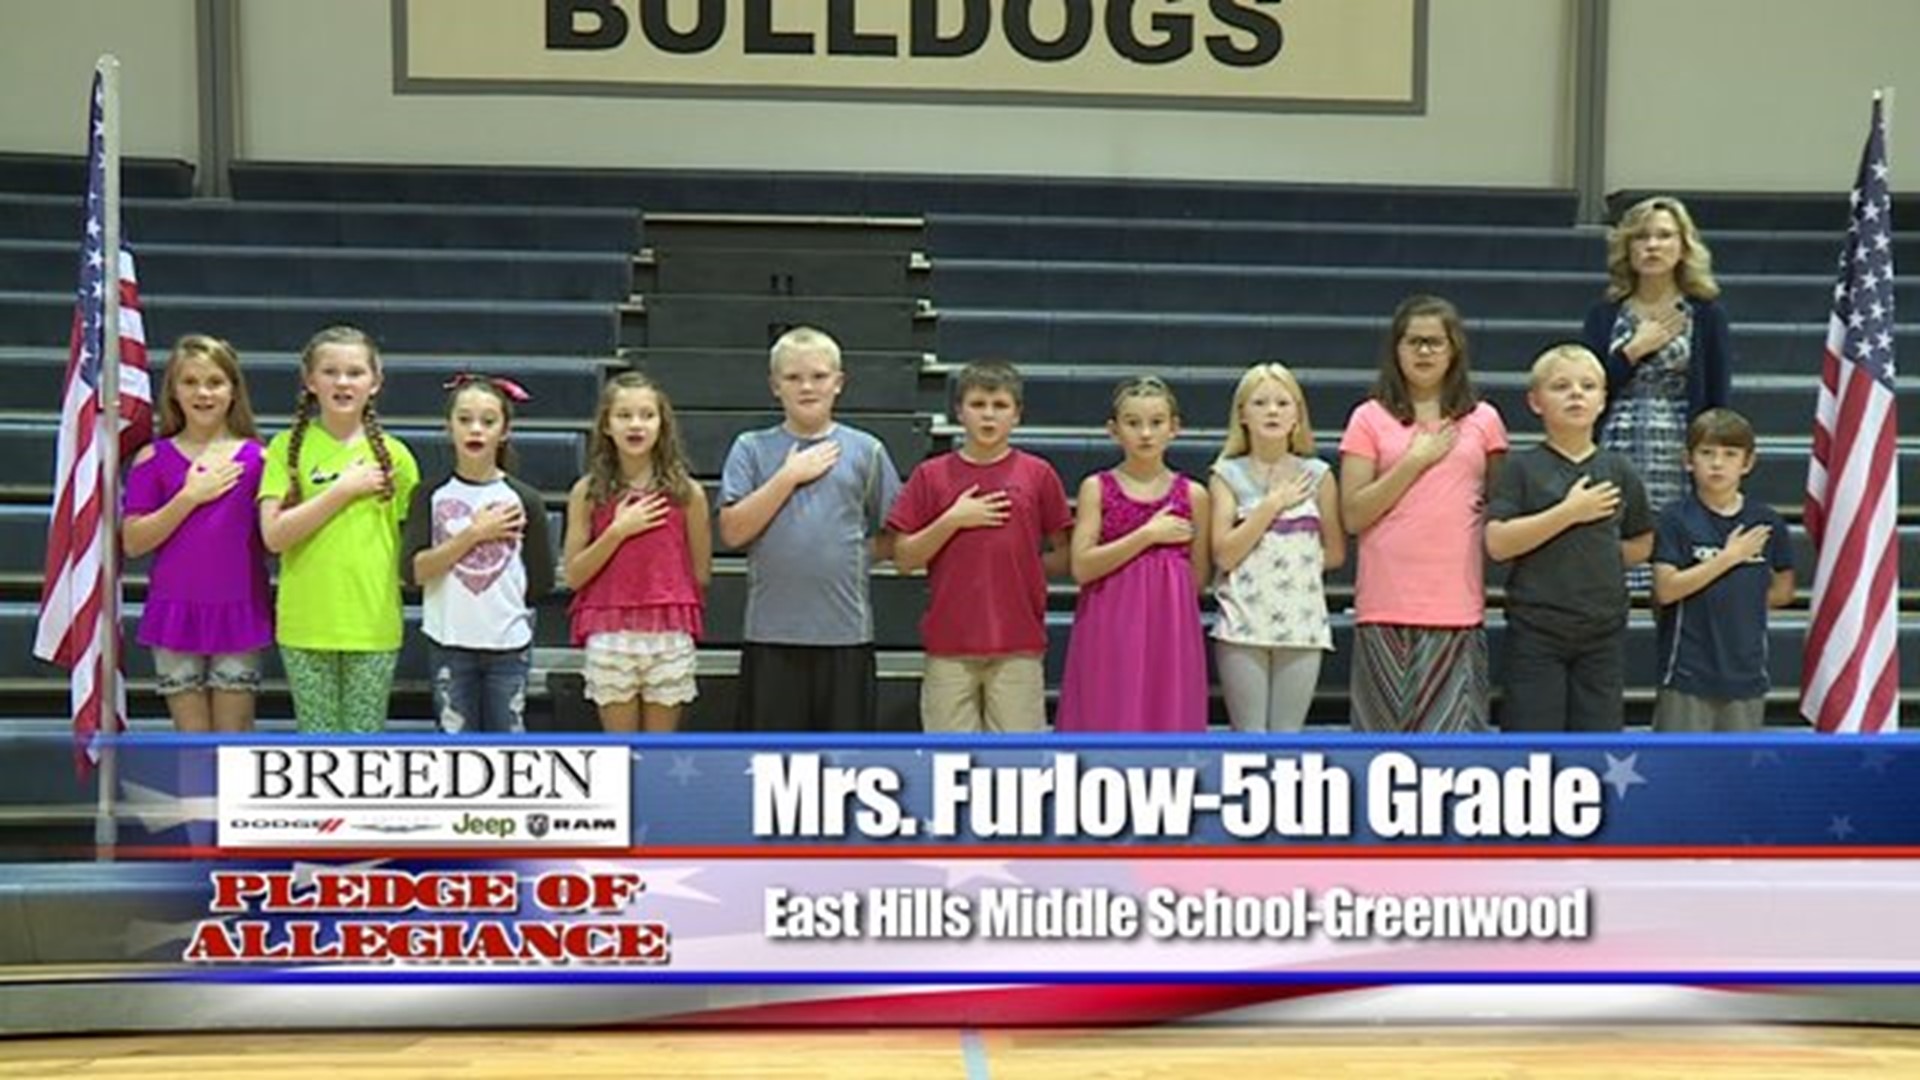 East Hills Middle School, Greenwood - Mrs. Furlow, 5th Grade